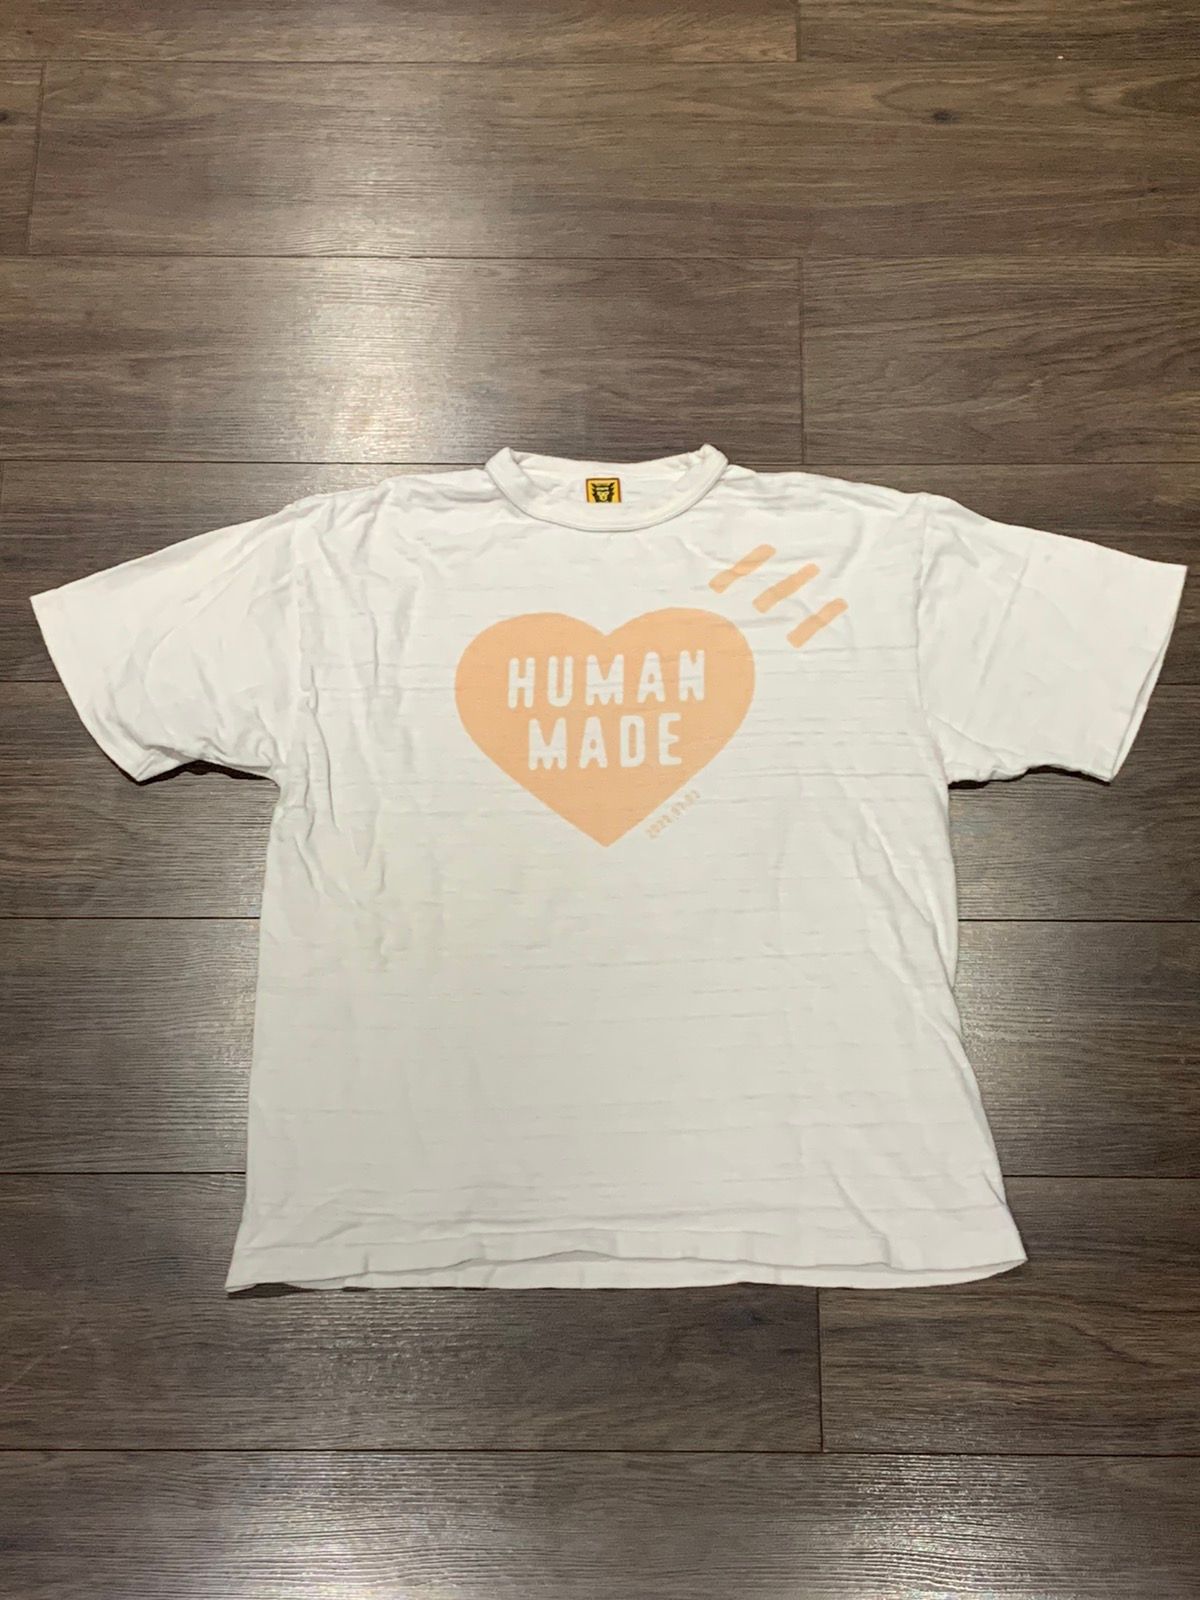 Human Made Human made daily t shirt | Grailed